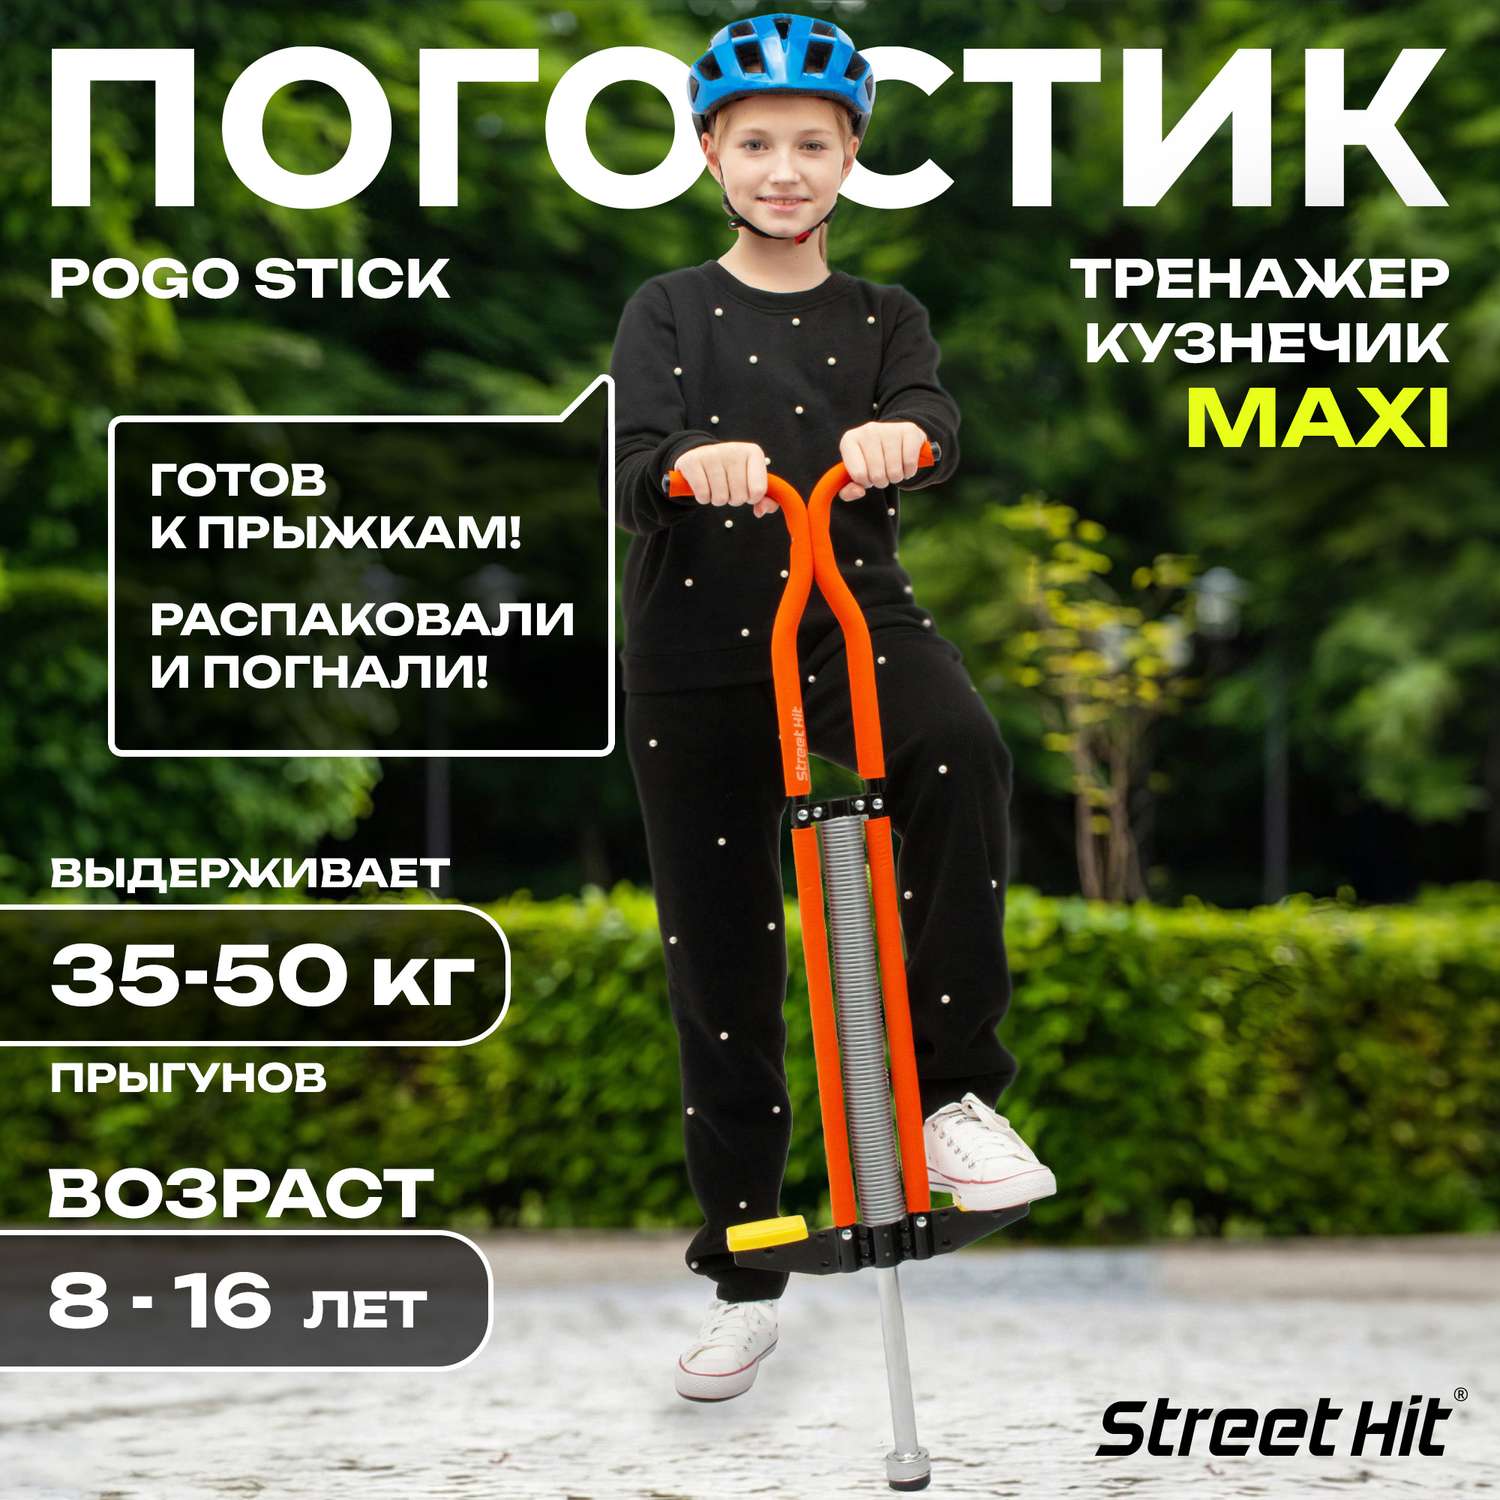 Тренажер-кузнечик Street Hit Pogo Stick Maxi до 50 кг Оранжевый - фото 1